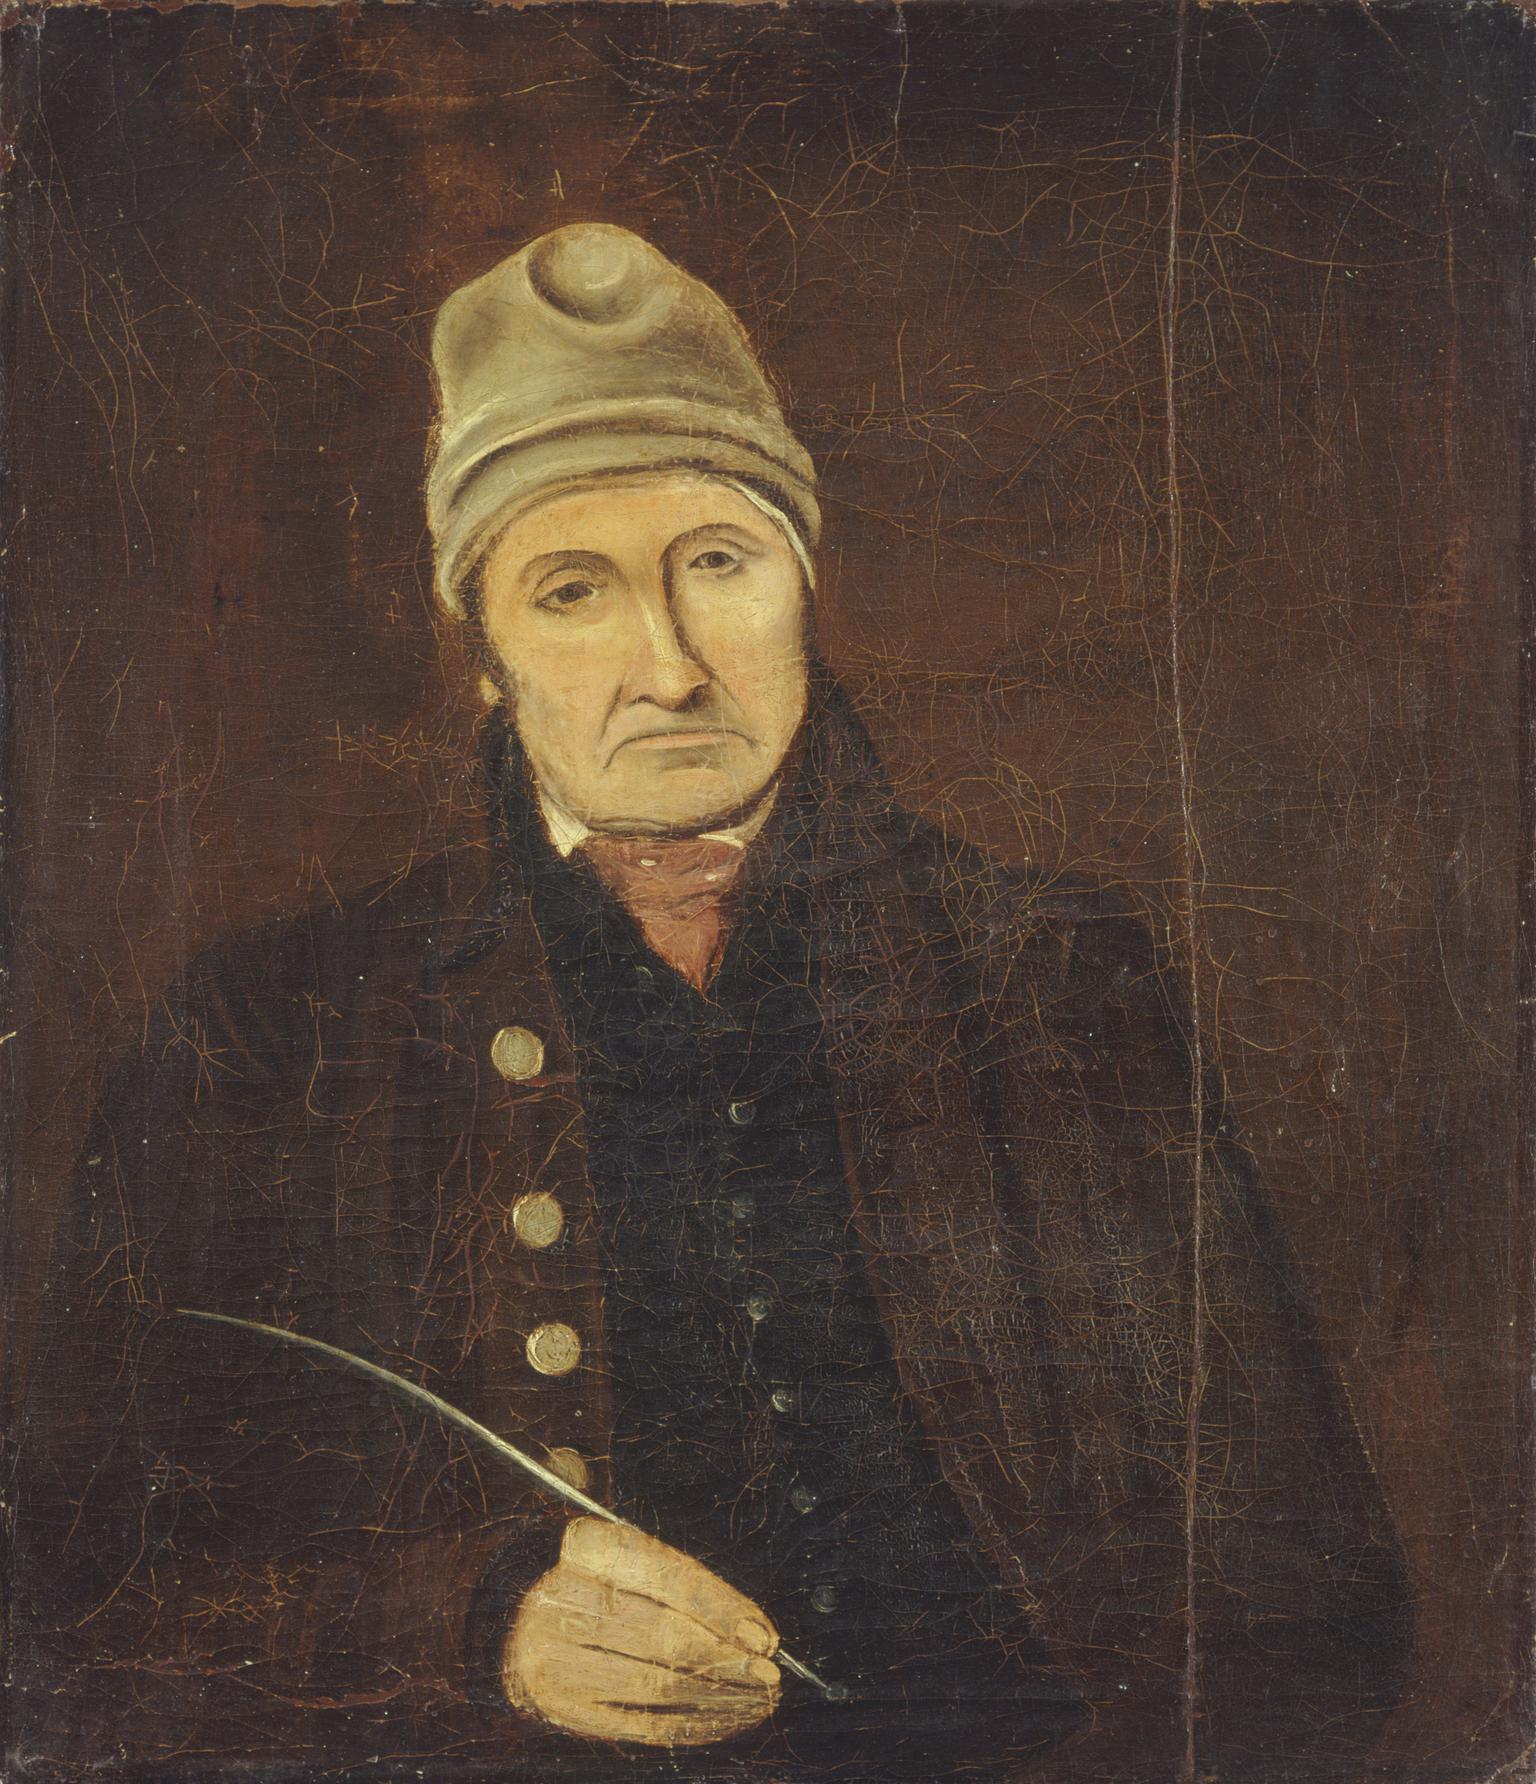 Thomas Edwards, Twm o'r Nant, (1739-1810)